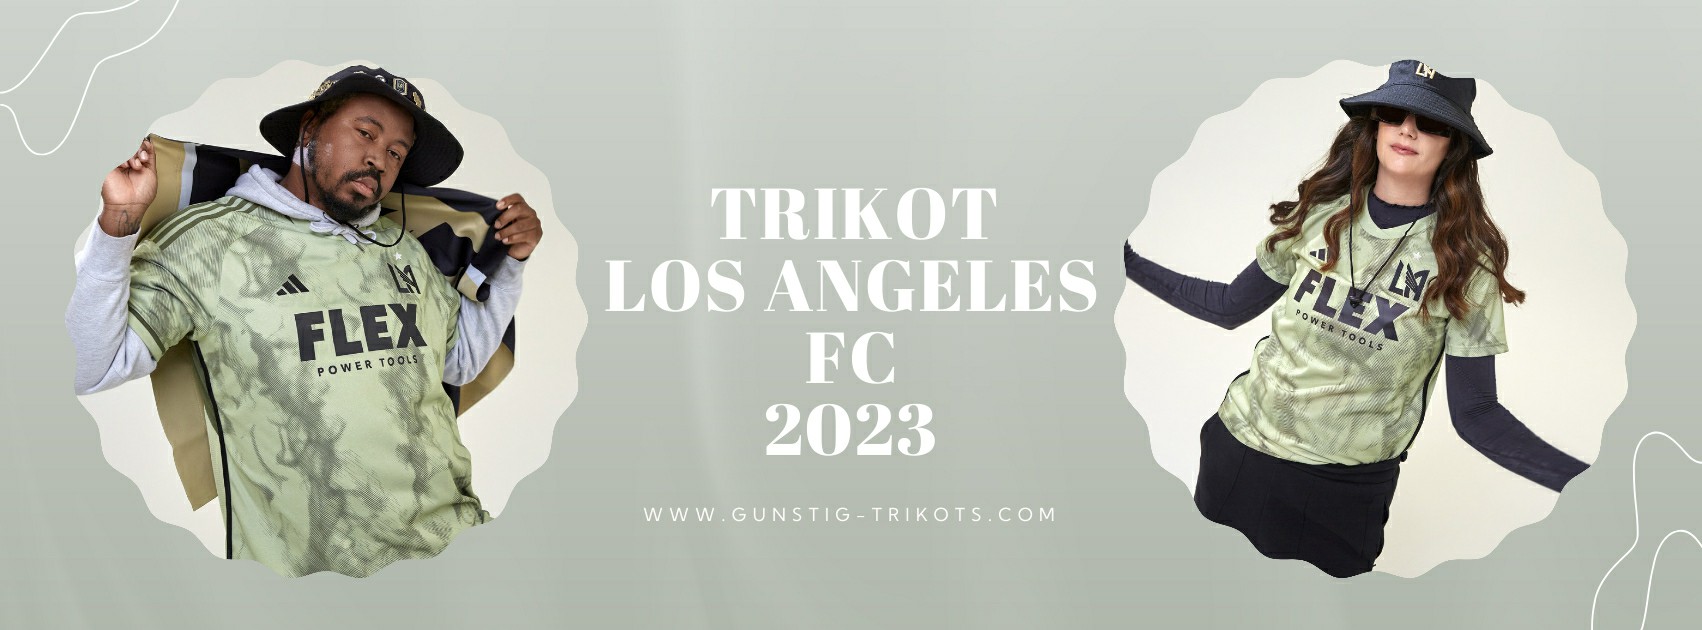 Los Angeles FC Trikot 2023-2024